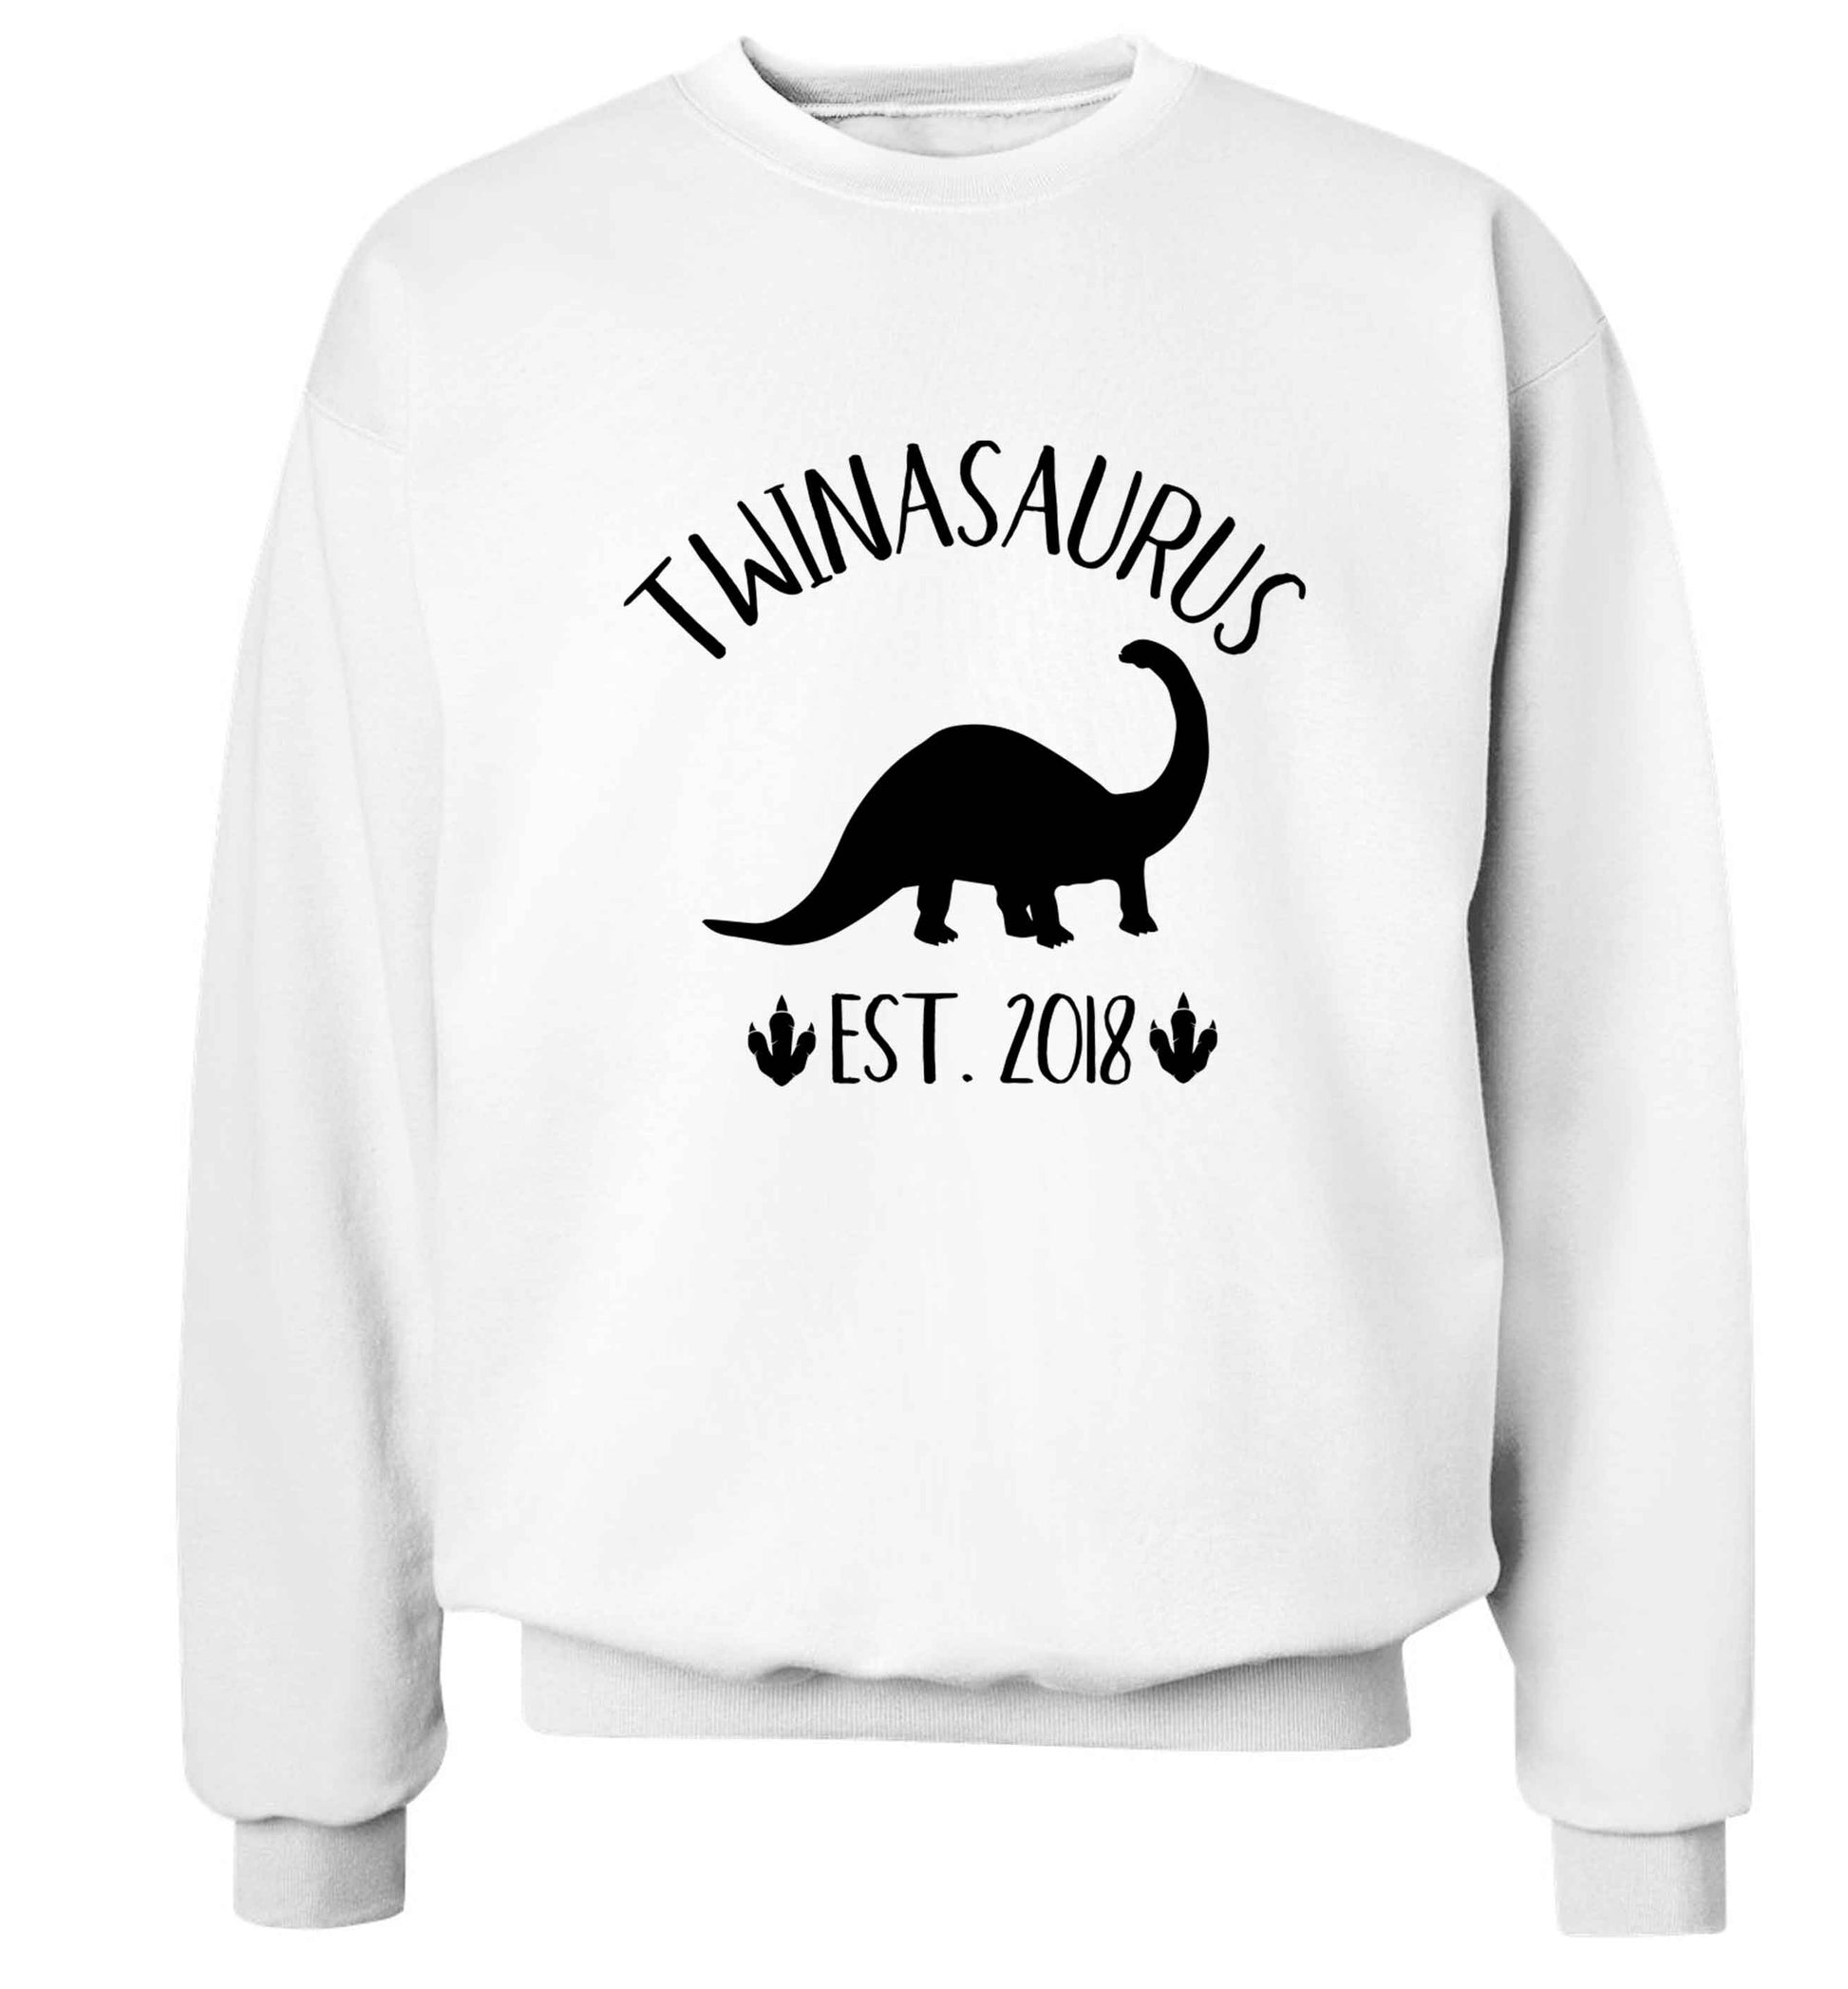 Personalised twinasaurus since (custom date) Adult's unisex white Sweater 2XL